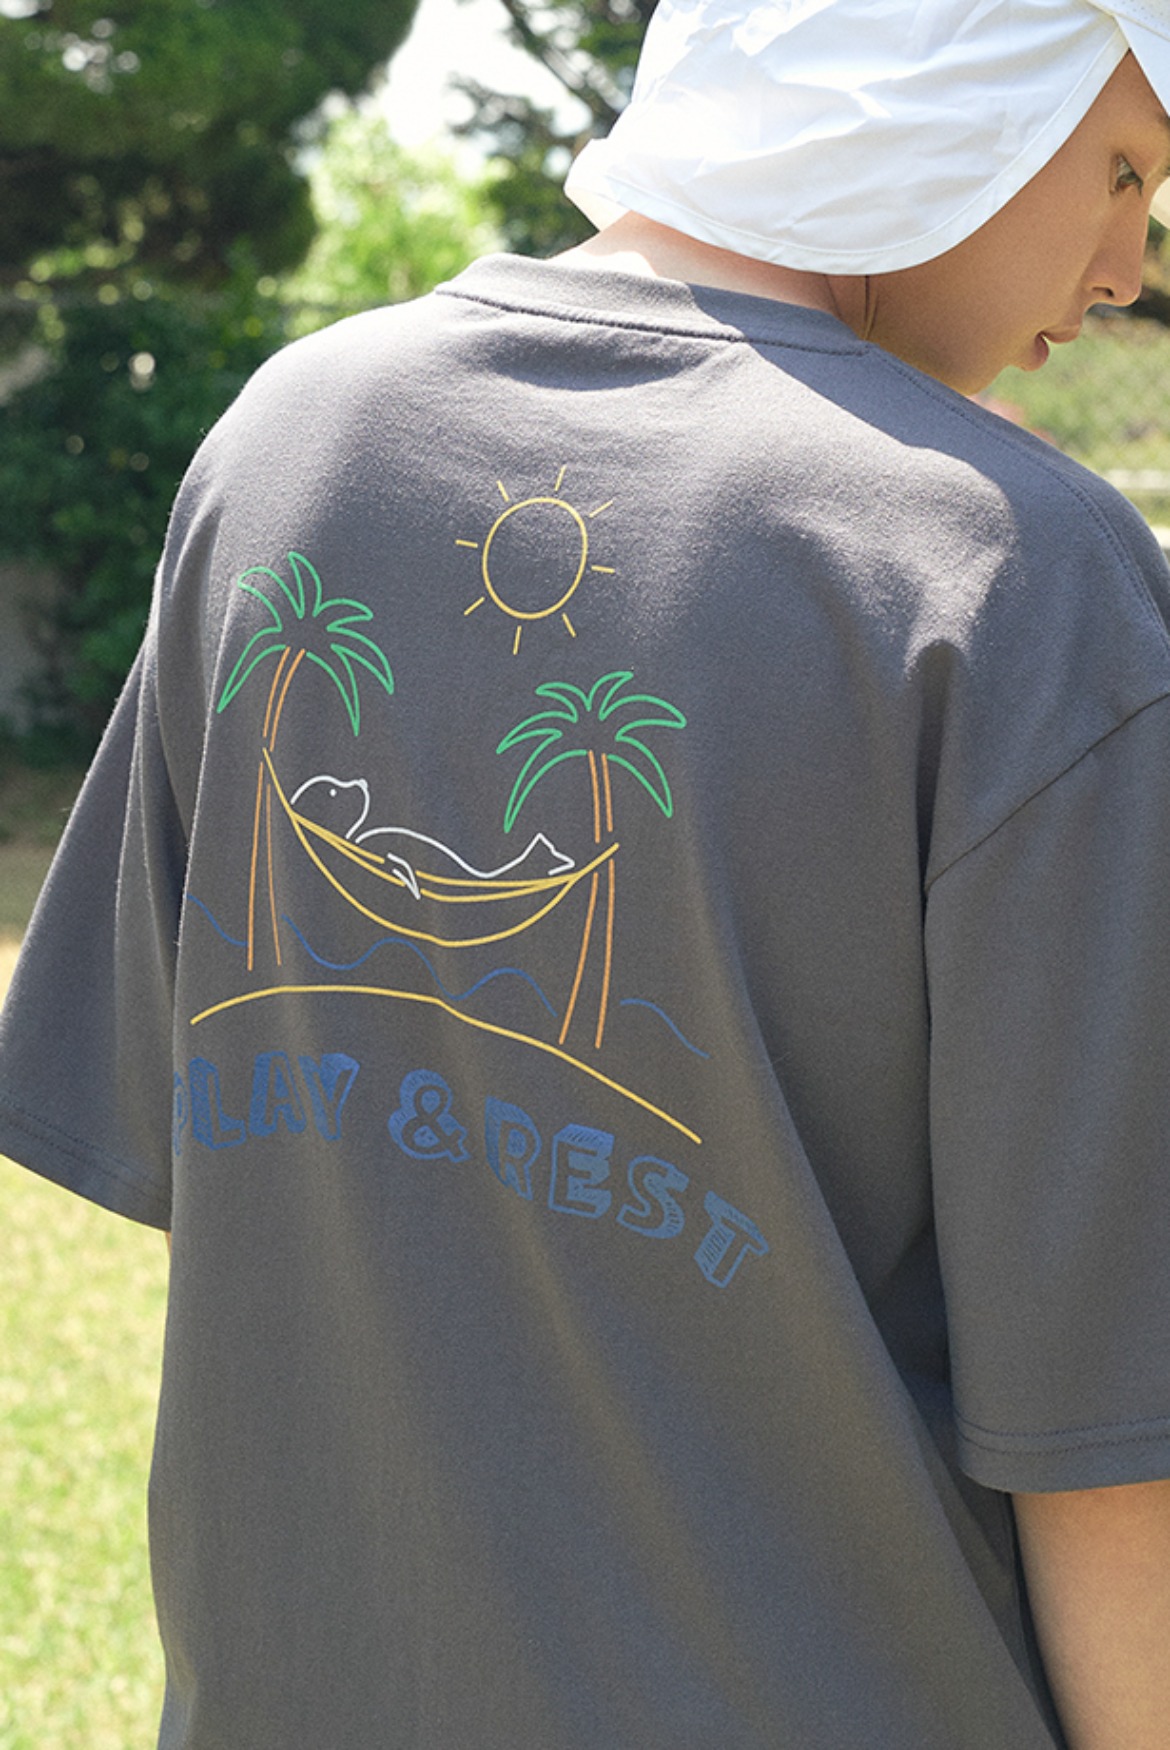 Sealion Surf T-Shirts [Charcoal]